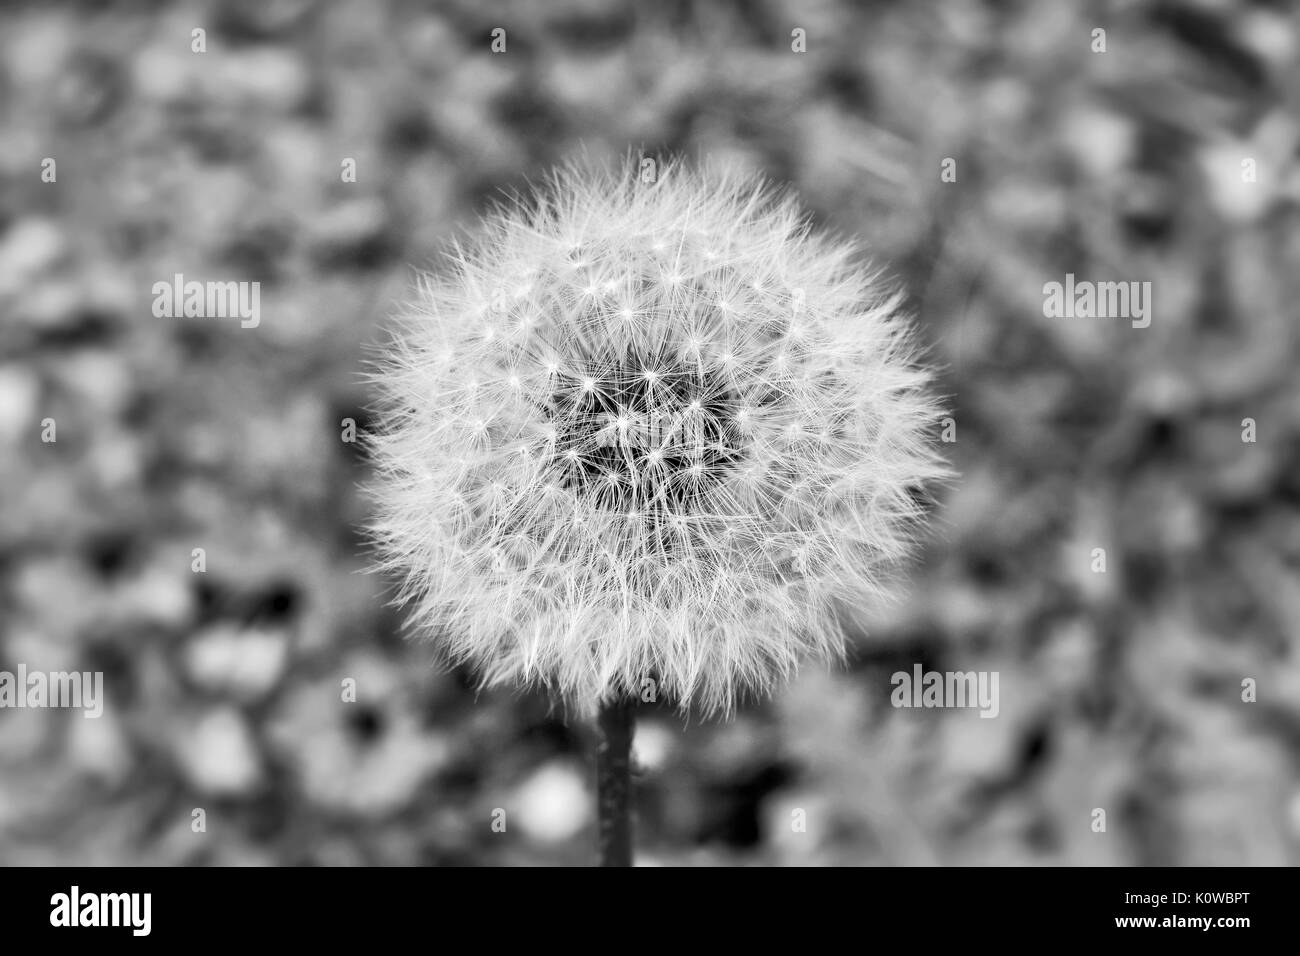 White Dandelion Puffball in black and white Stock Photo